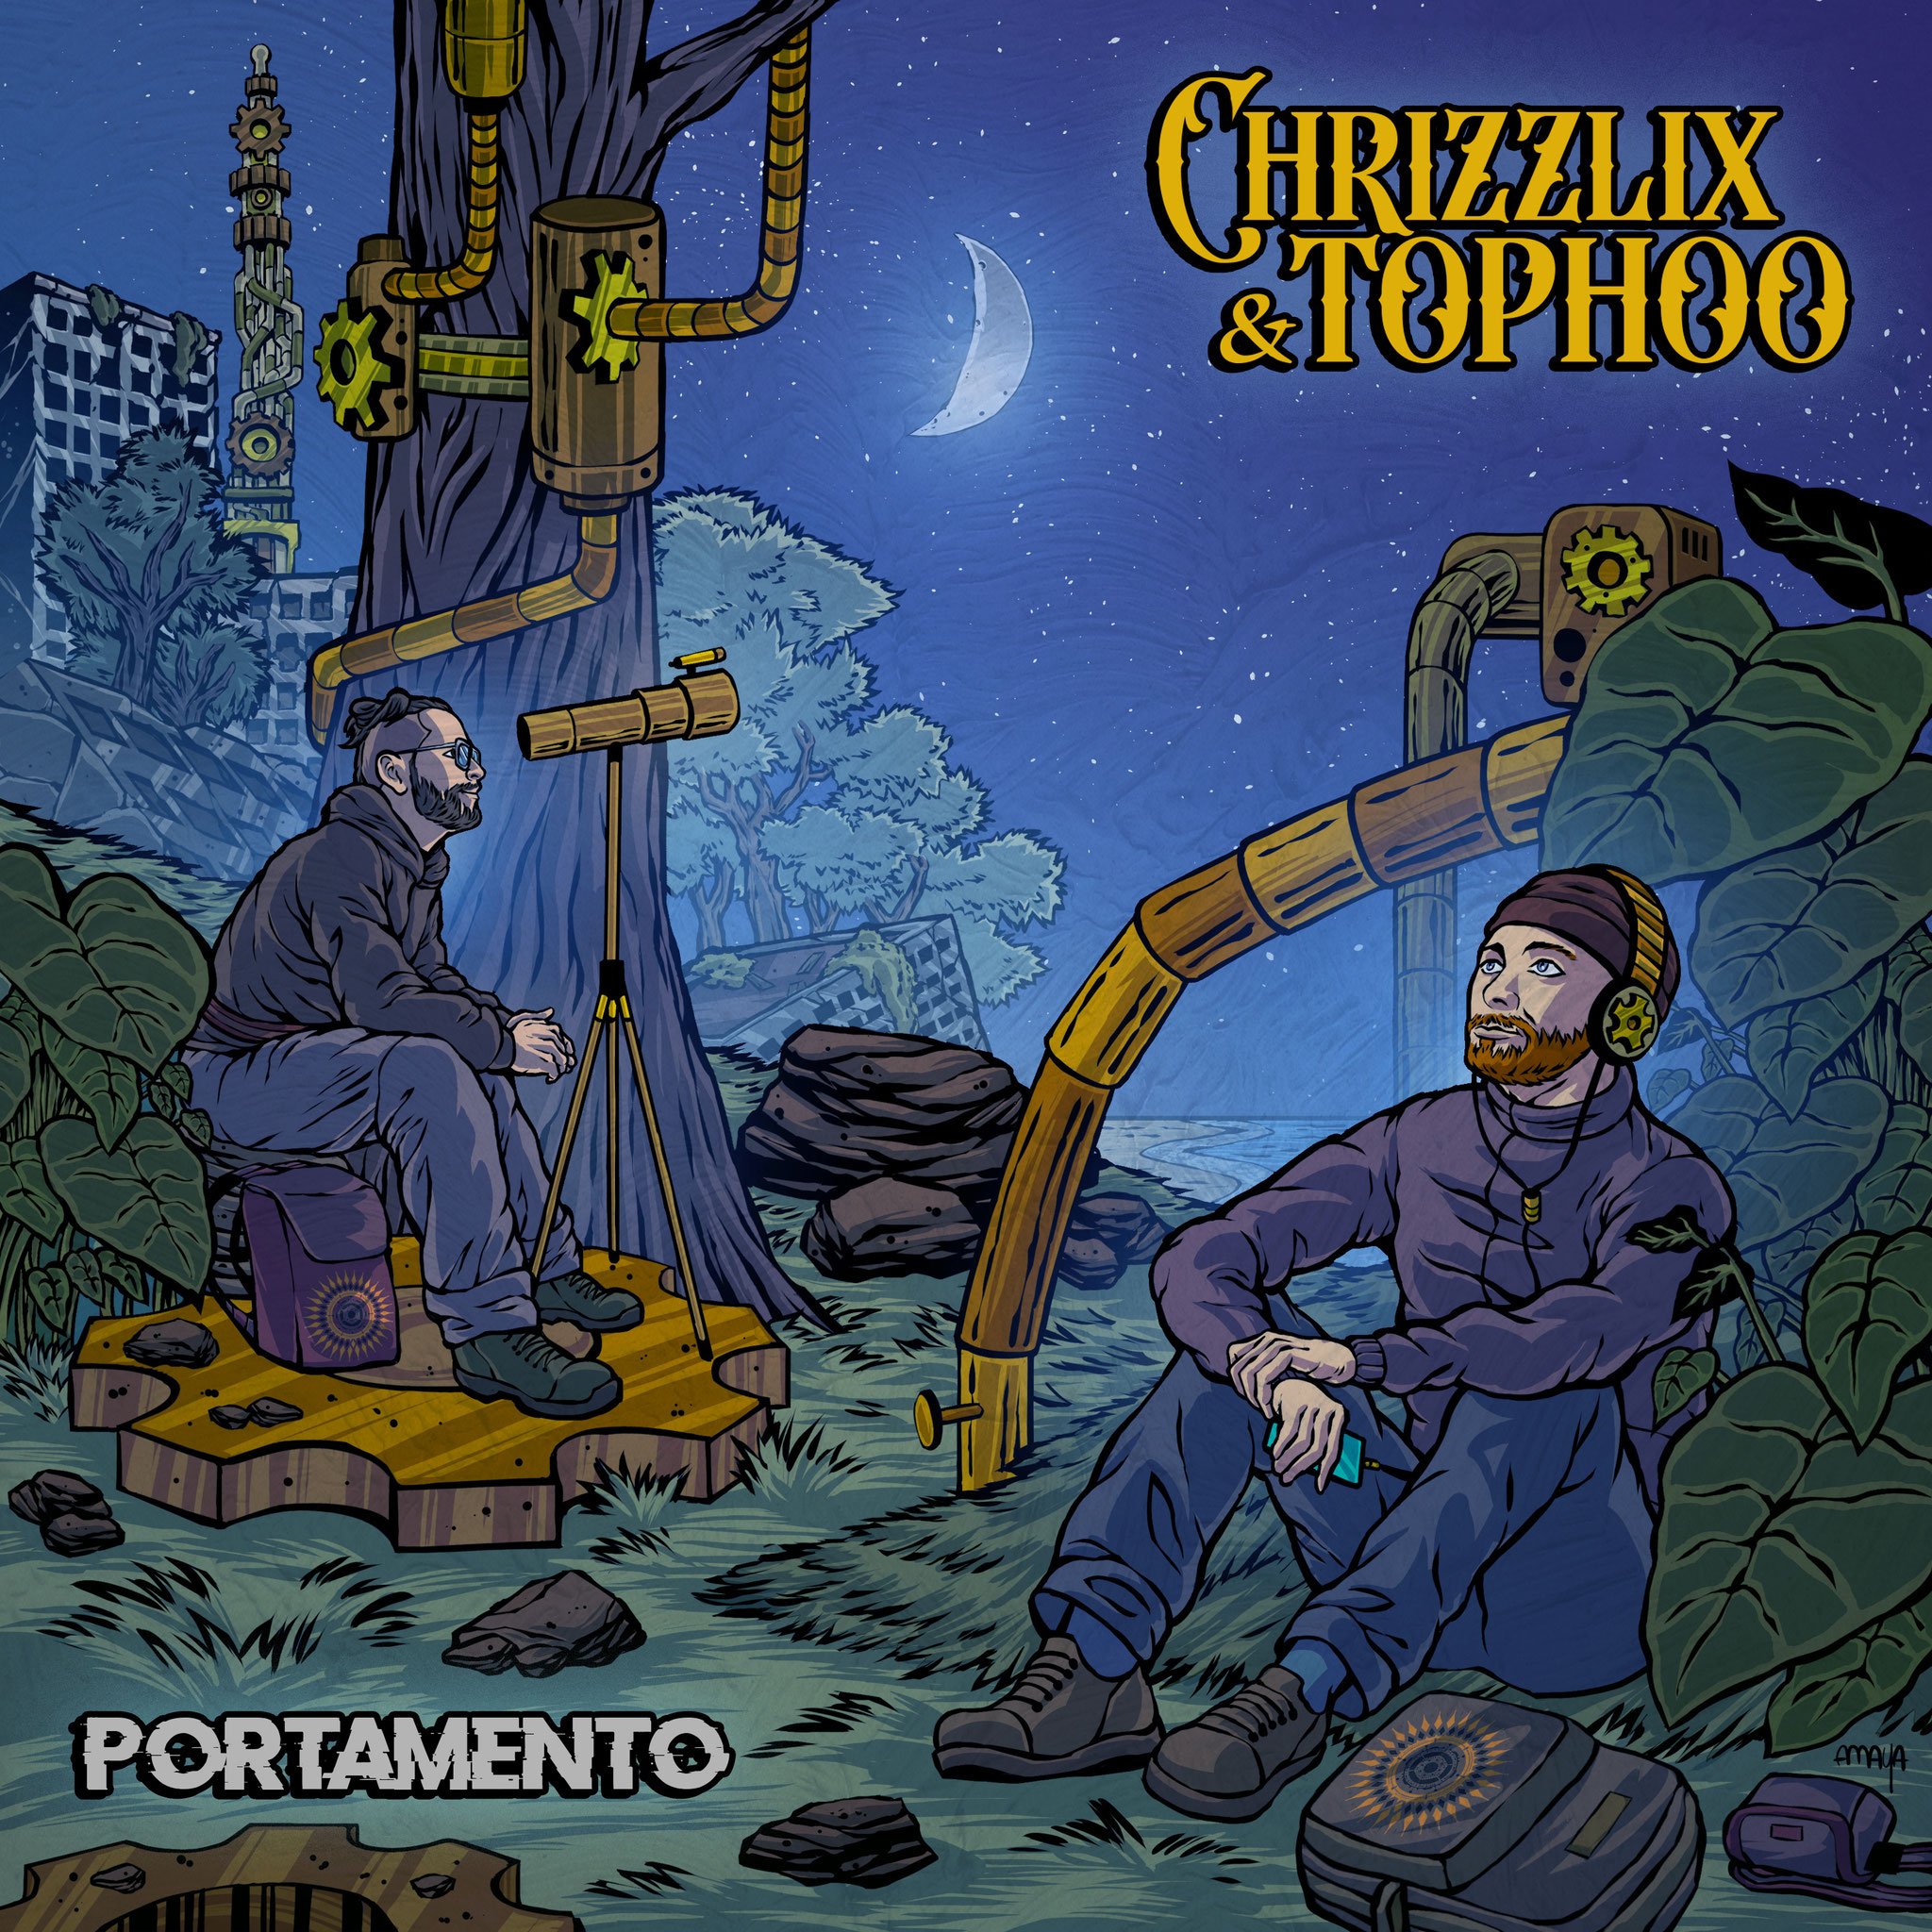 Chrizzlix & Tophoo - Portamento